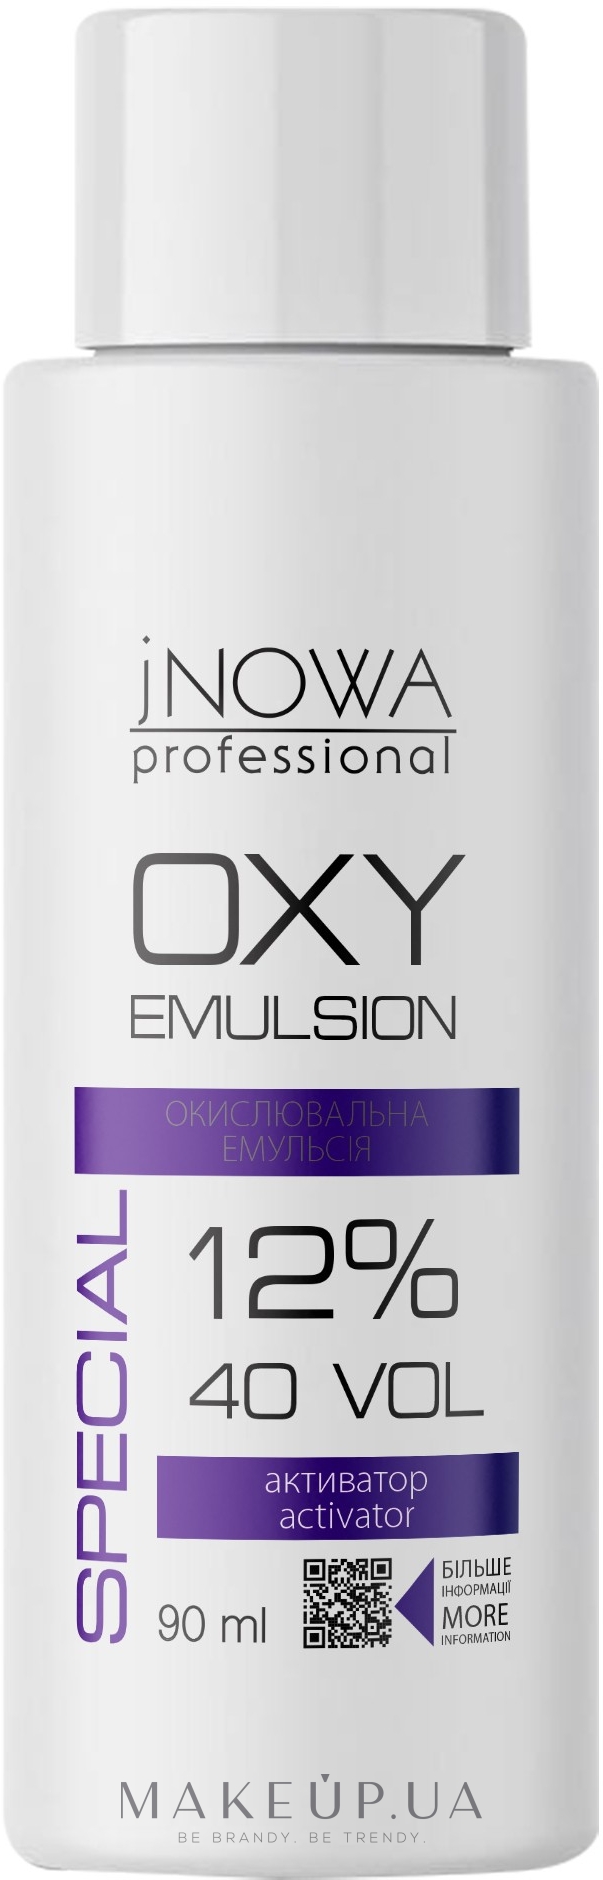 Окислительная эмульсия, 12 % - jNOWA Professional OXY 12 % (40 vol) — фото 90ml